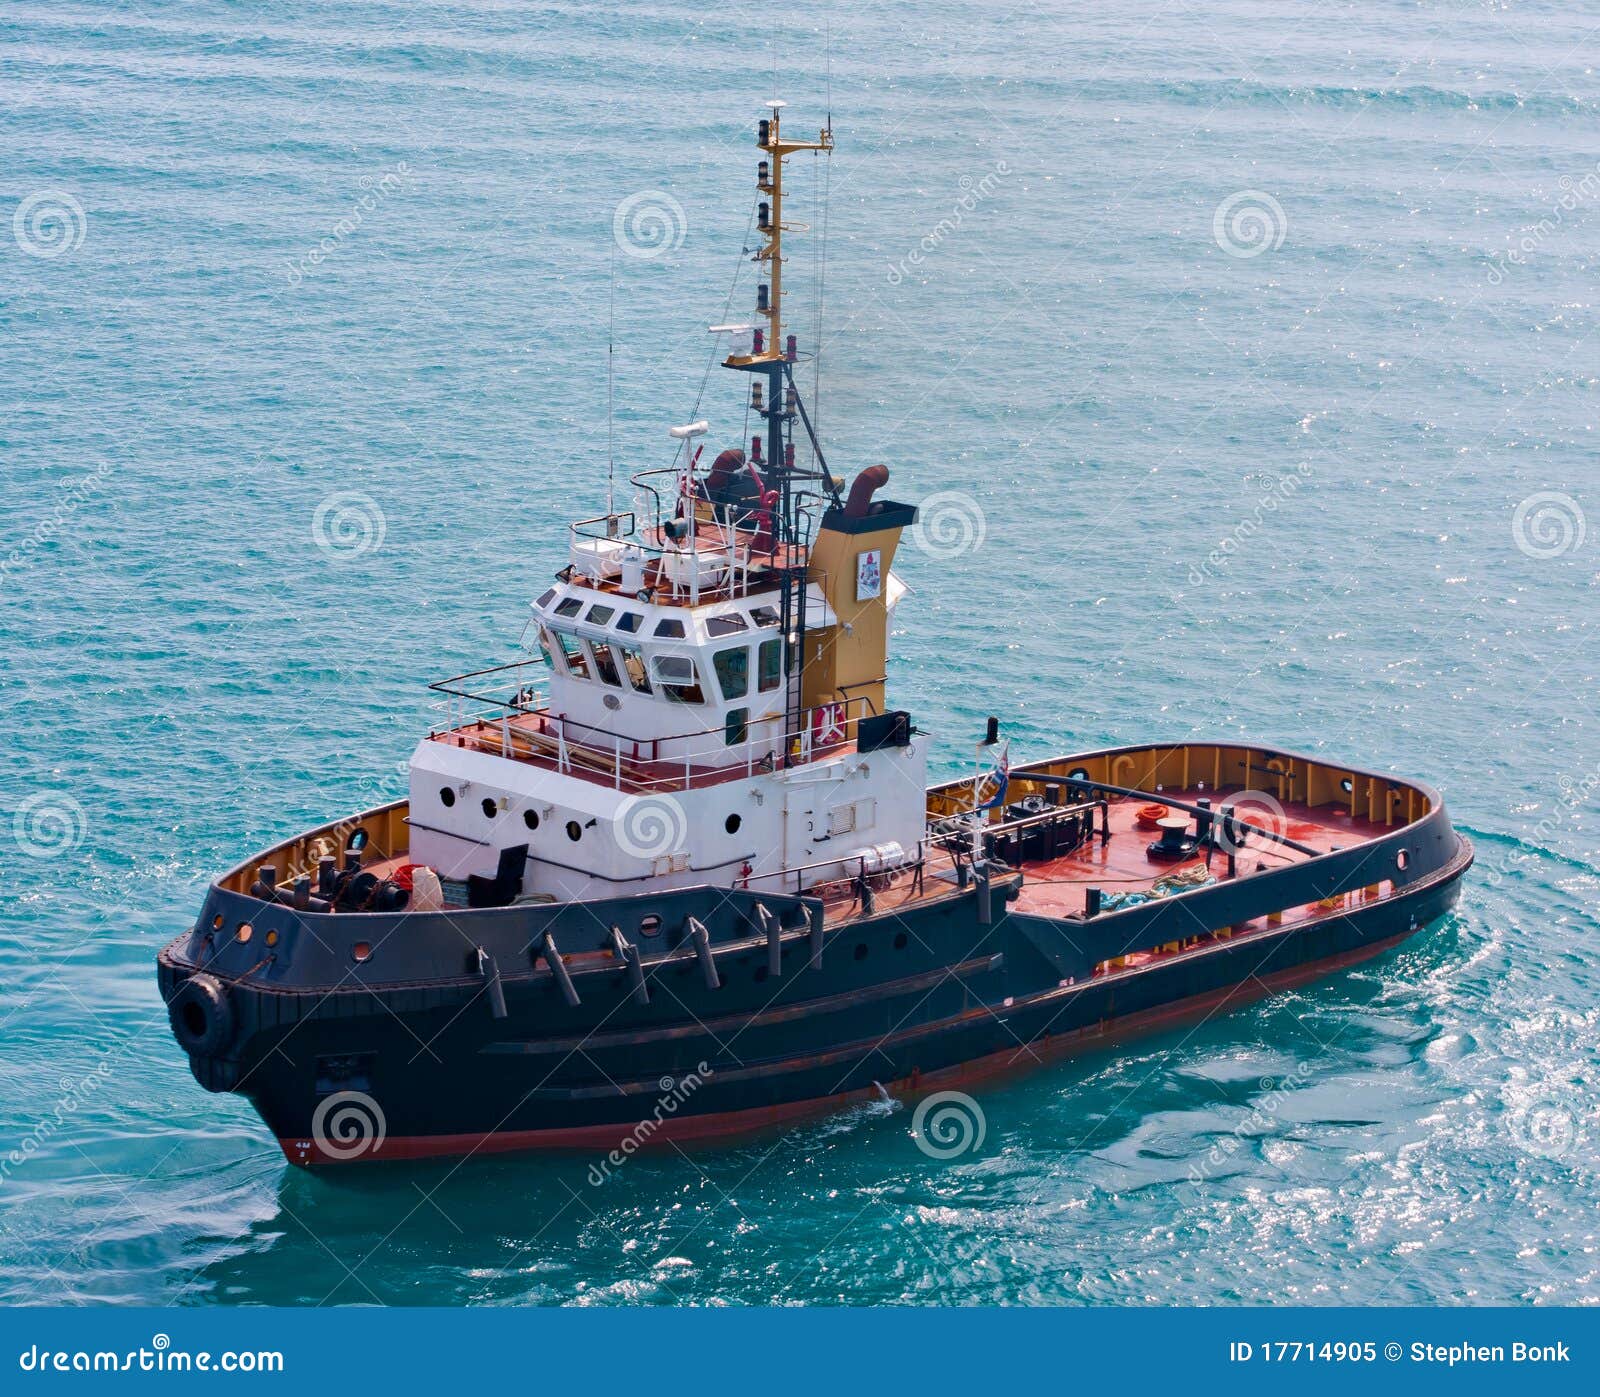 Tugboat stock image. Image of ships, ship, maritime, boats ...